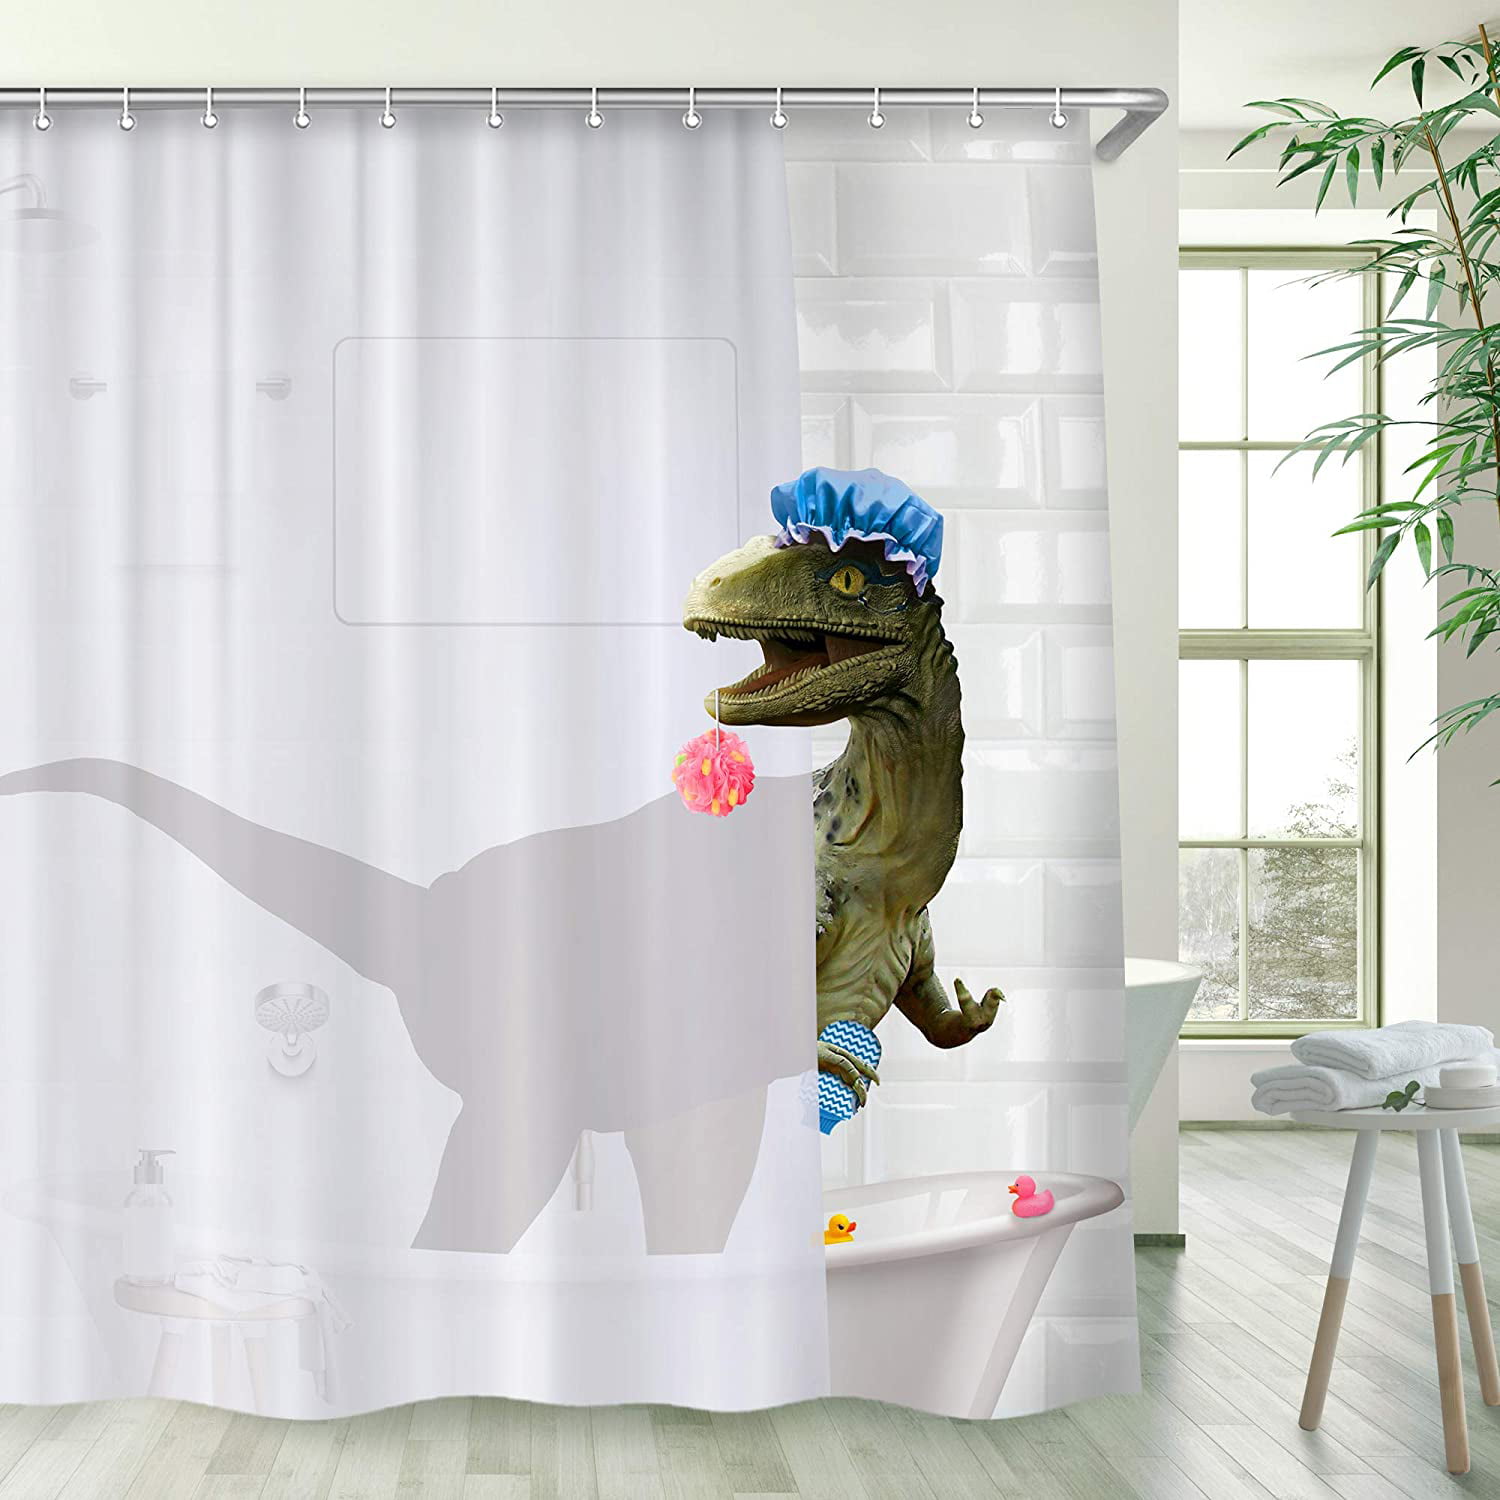 Waterproof Fabric Jurassic Earth Dinosaur Shower Curtain Set Bathroom 12 Hooks 